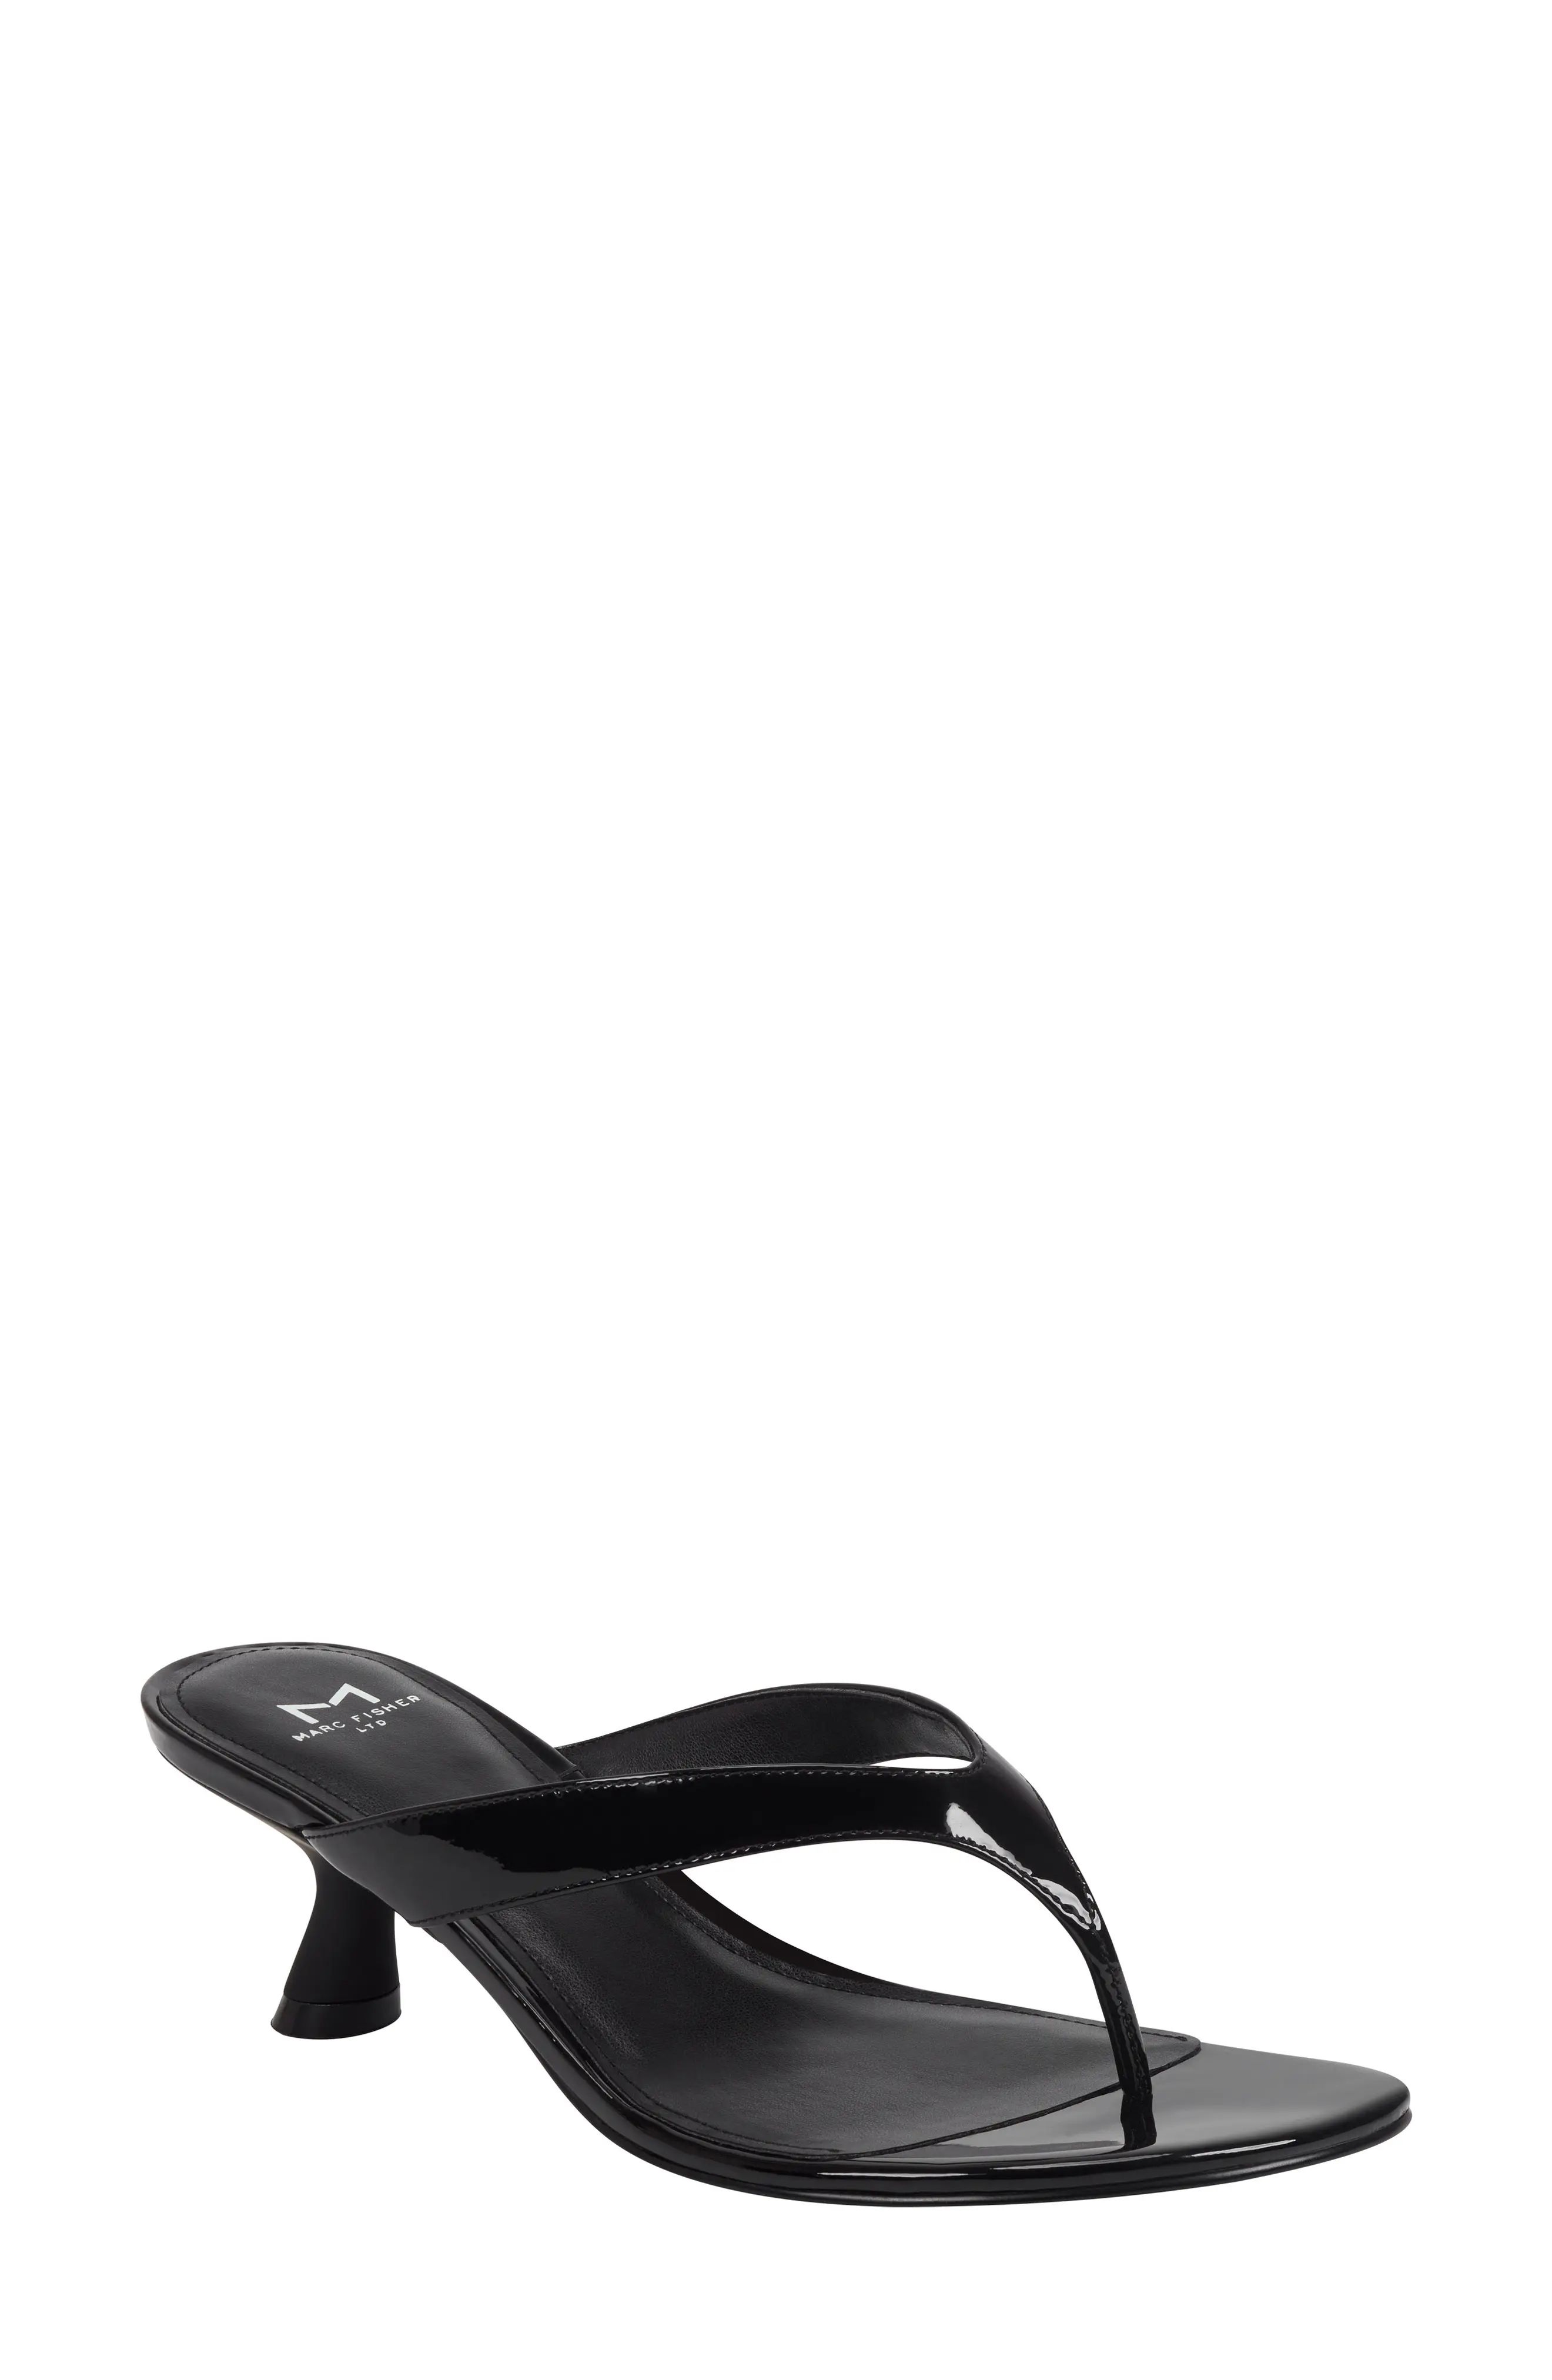 Women's Marc Fisher Ltd Dahila Flip Flop, Size 11 M - Black | Nordstrom